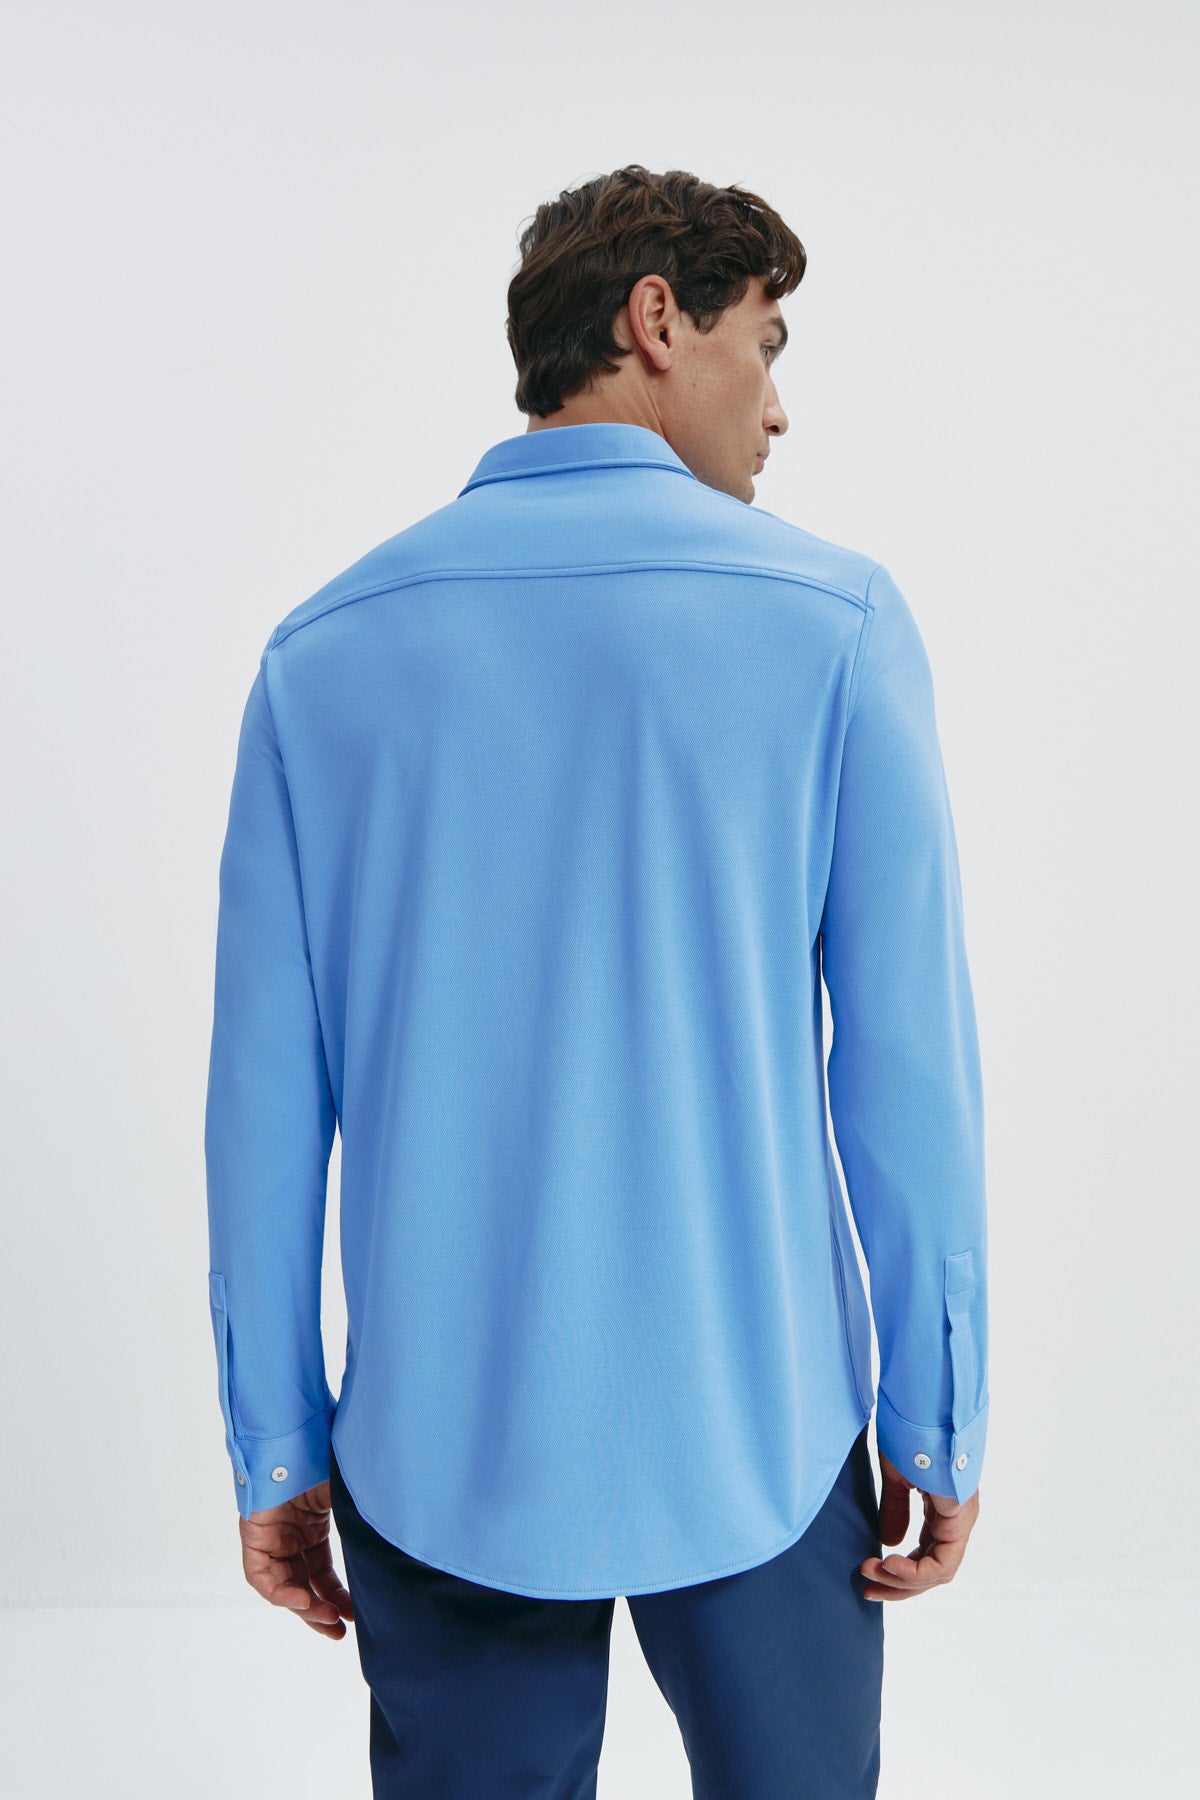 Camisa azul atlas regular para hombre sin arrugas ni manchas. Manga larga, antiarrugas y antimanchas. Foto espalda